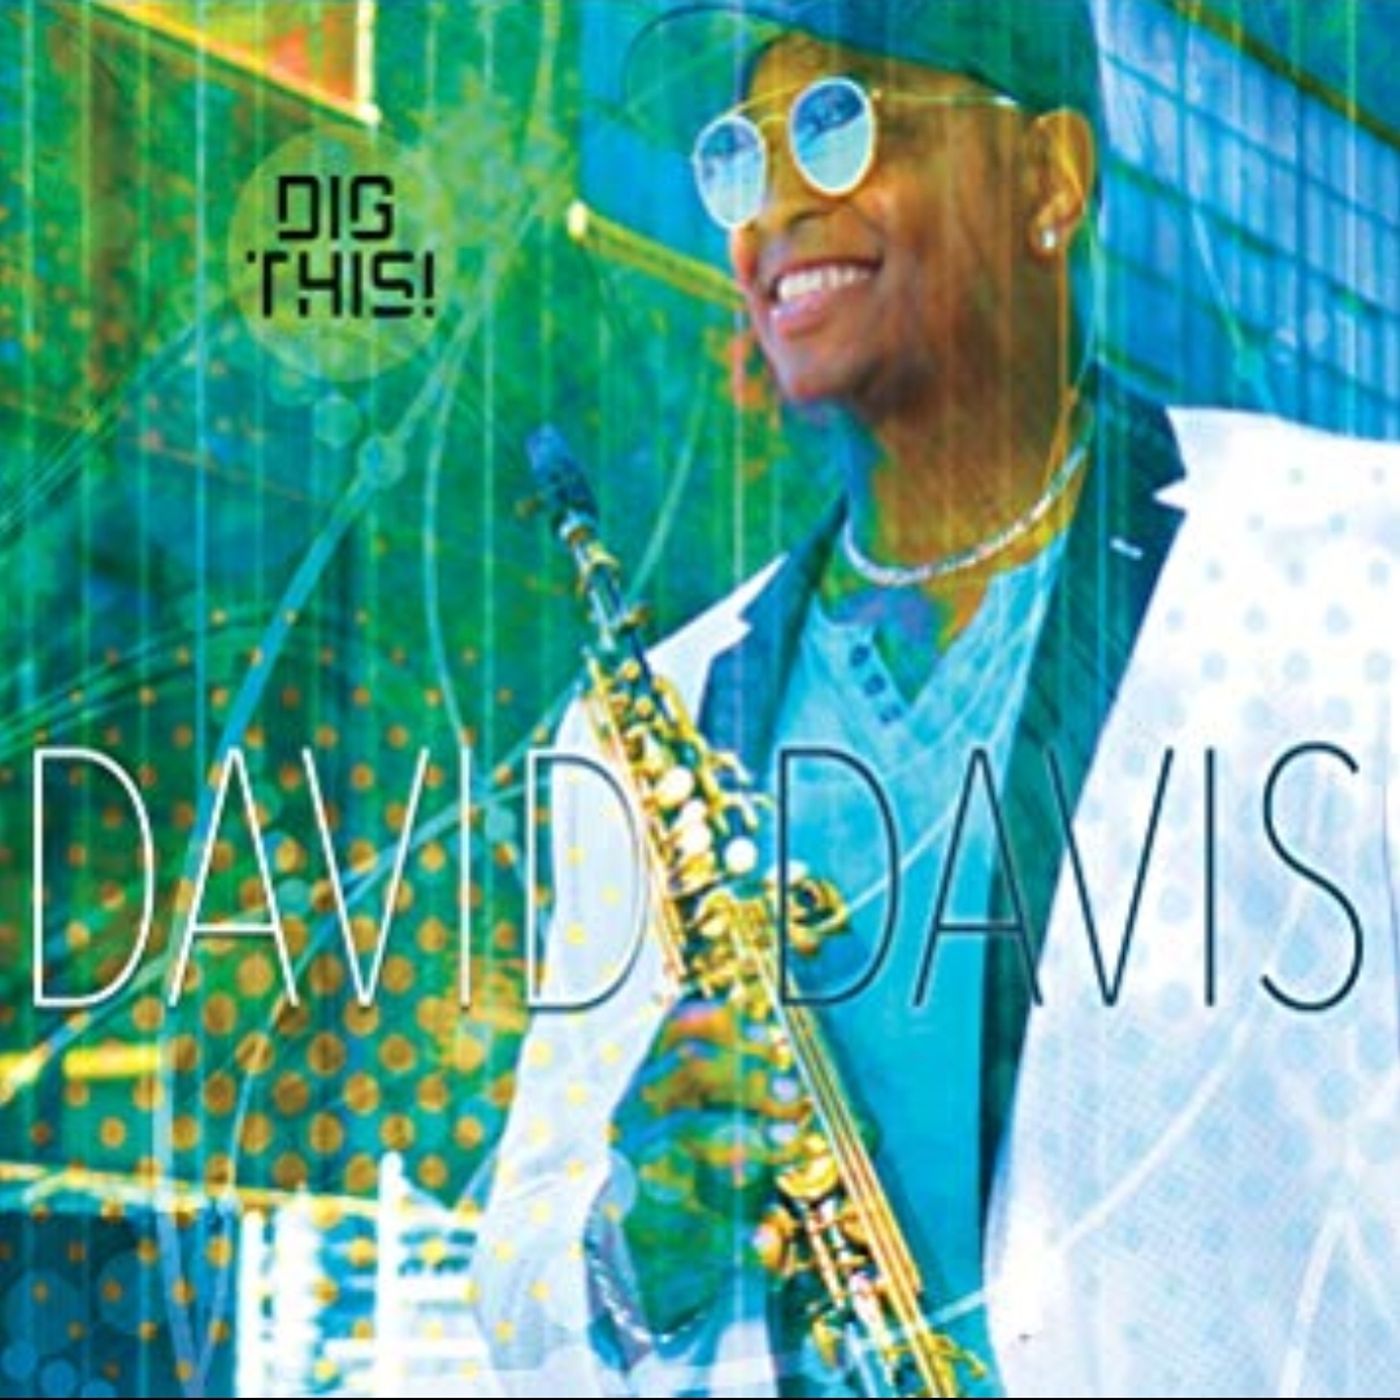 THE DOPE MUSIC POD Vol. 19: Featuring Jazz by David Davis (.@3dmusic)